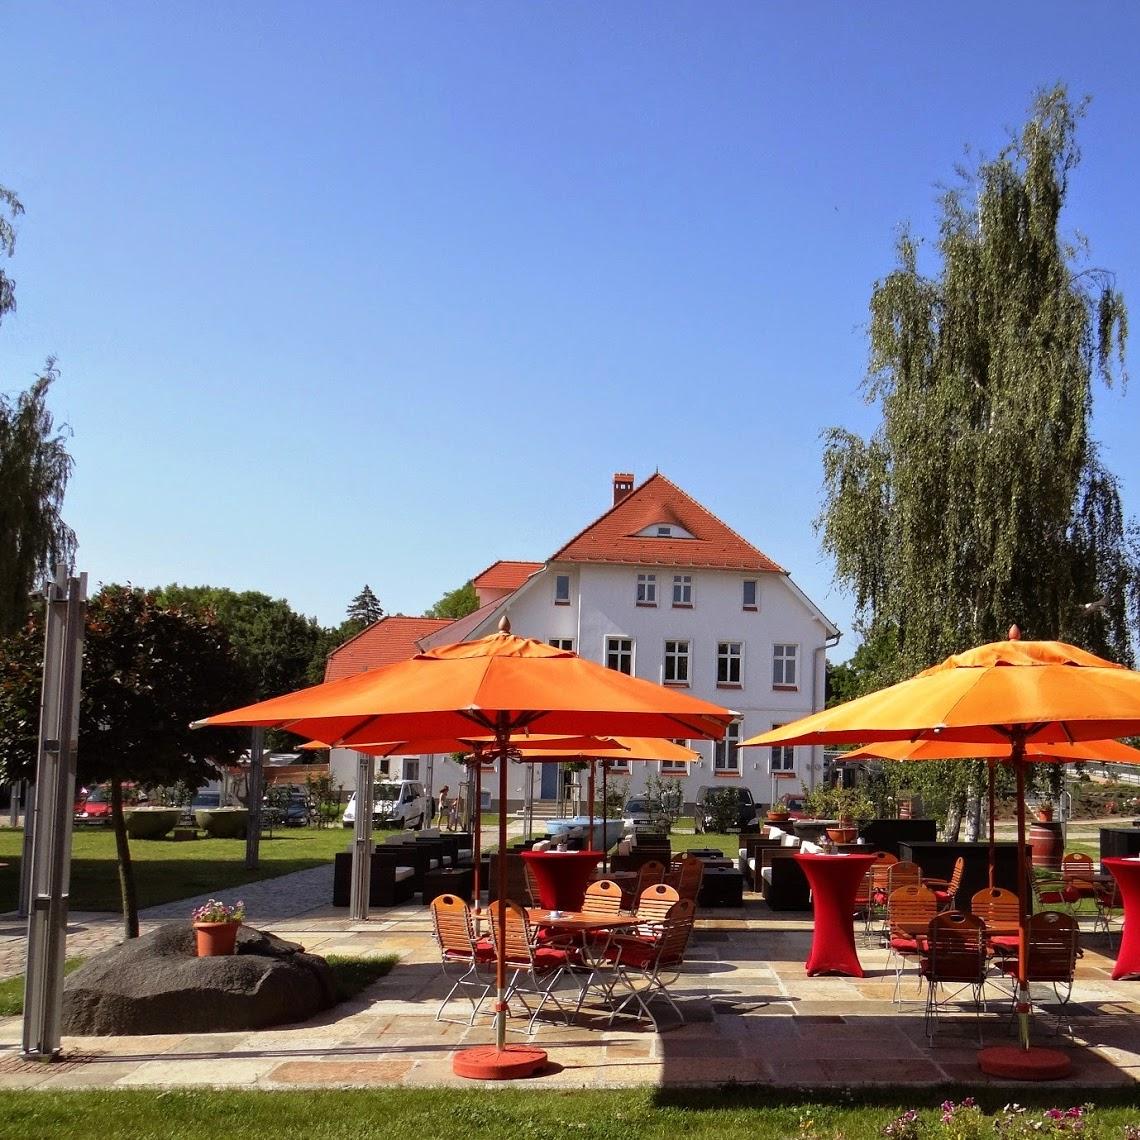 Restaurant "Hotel und Restaurant Am Peenetal" in Neetzow-Liepen